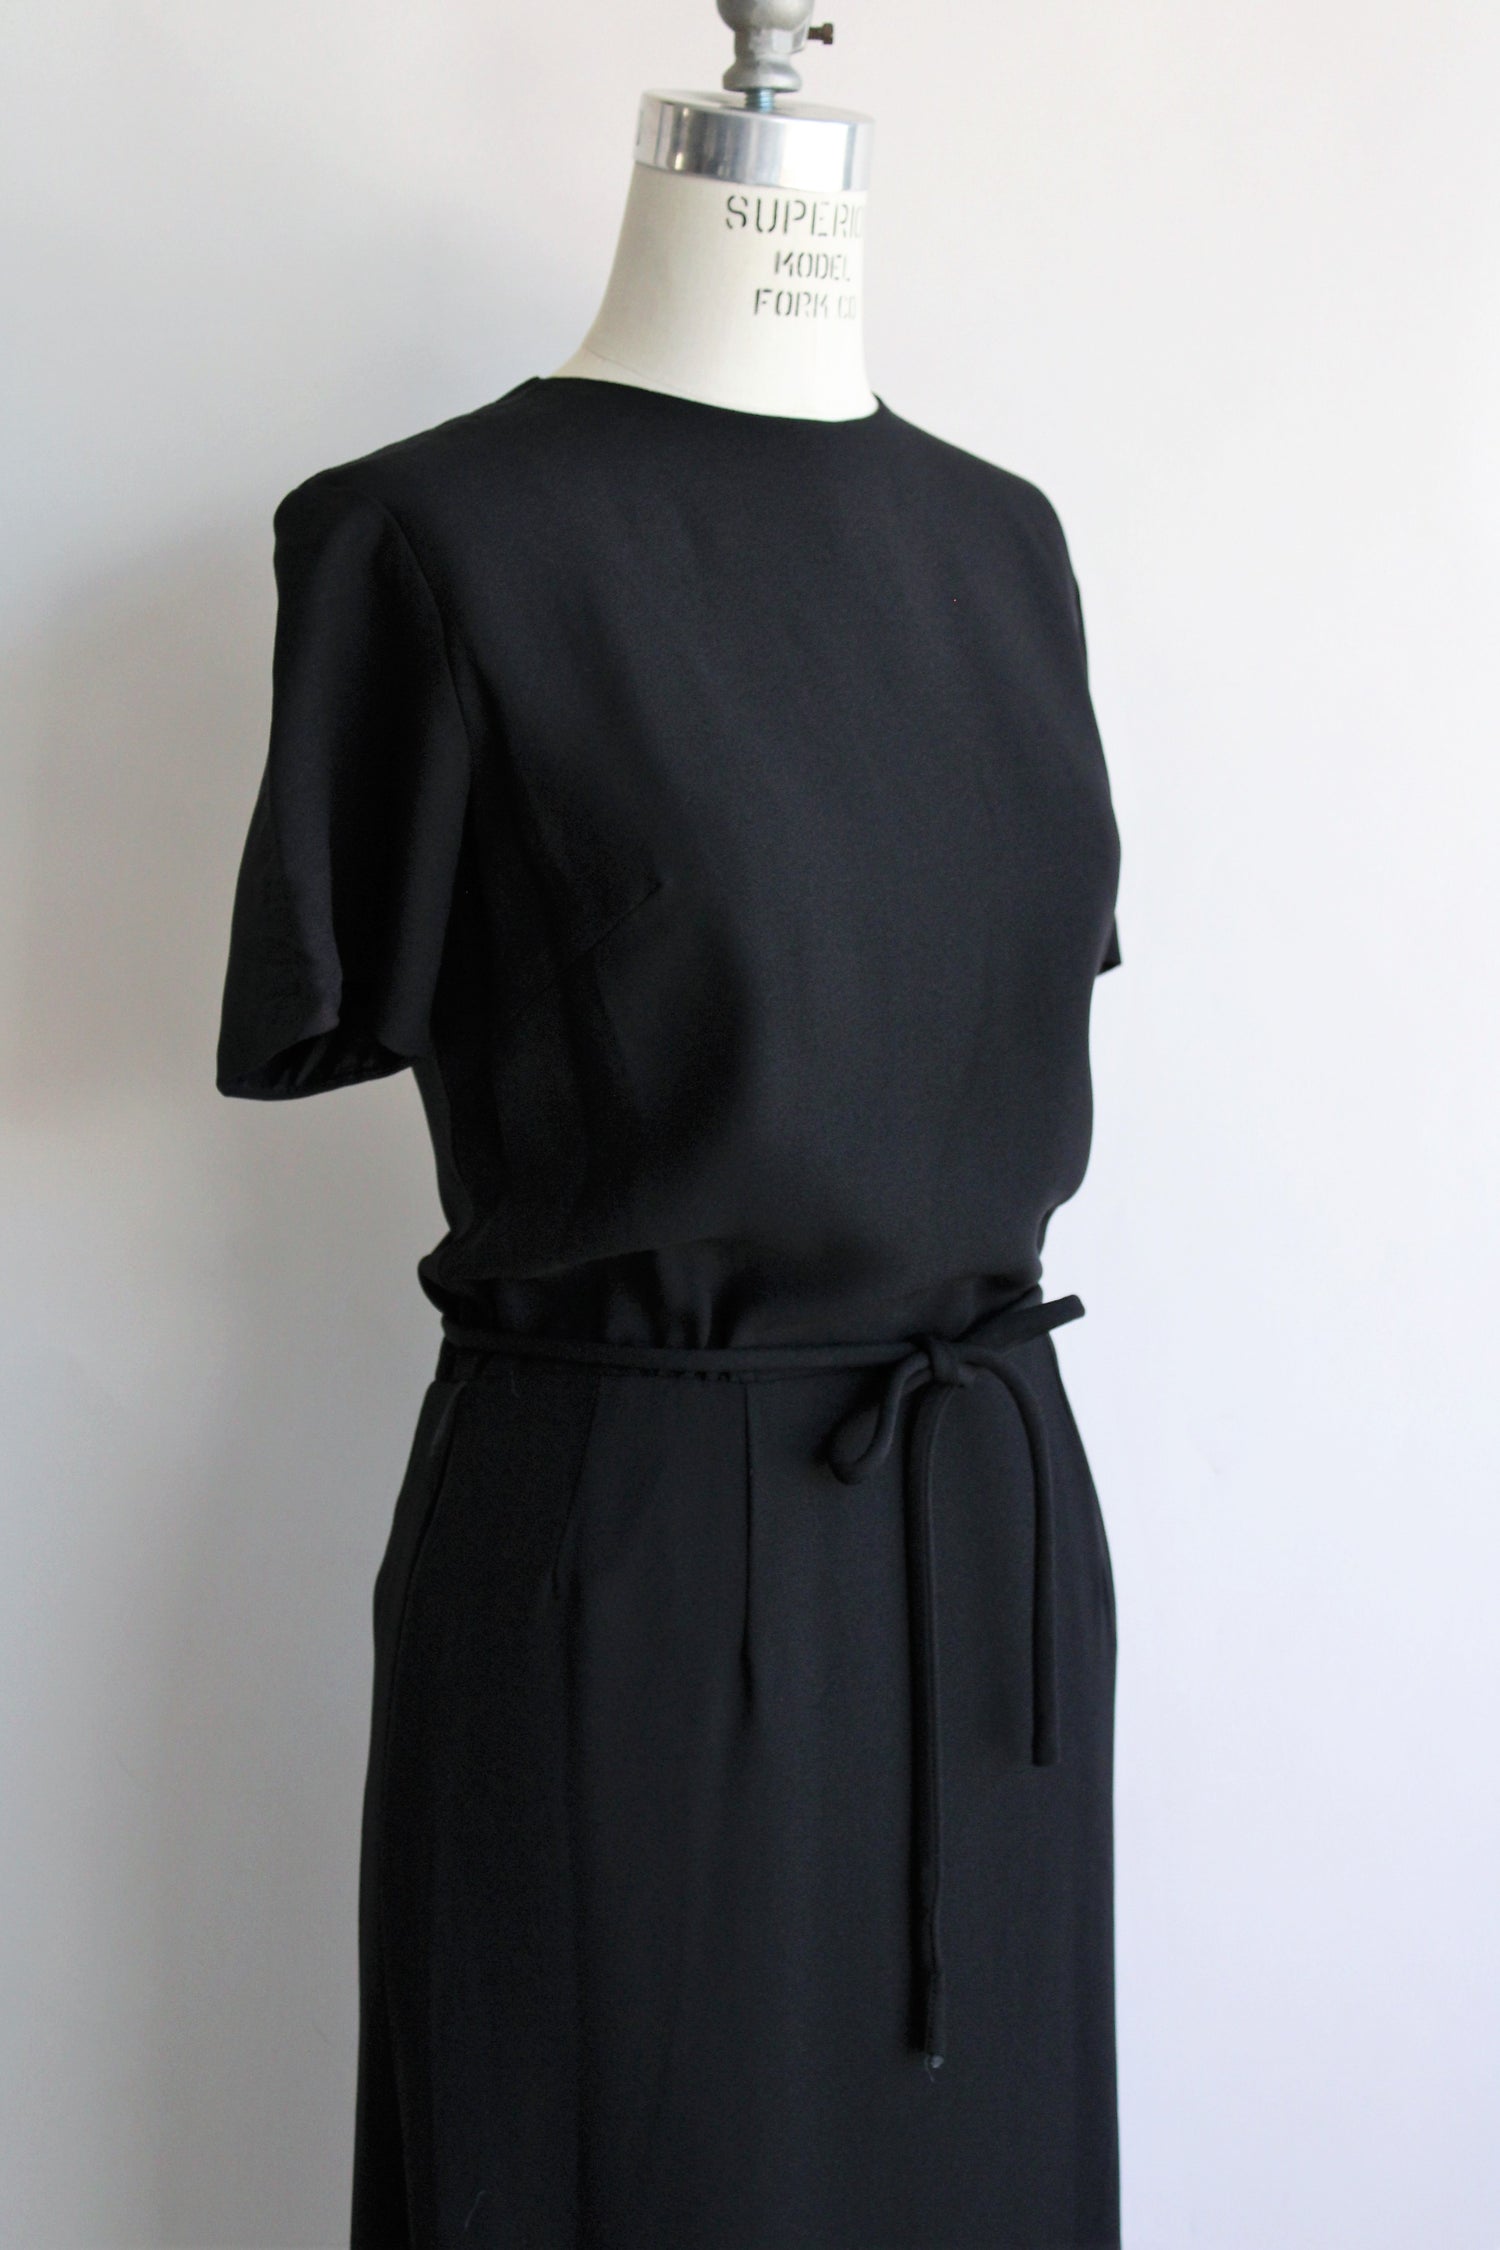 Vintage 1960s Black Dress by Georgee Originals